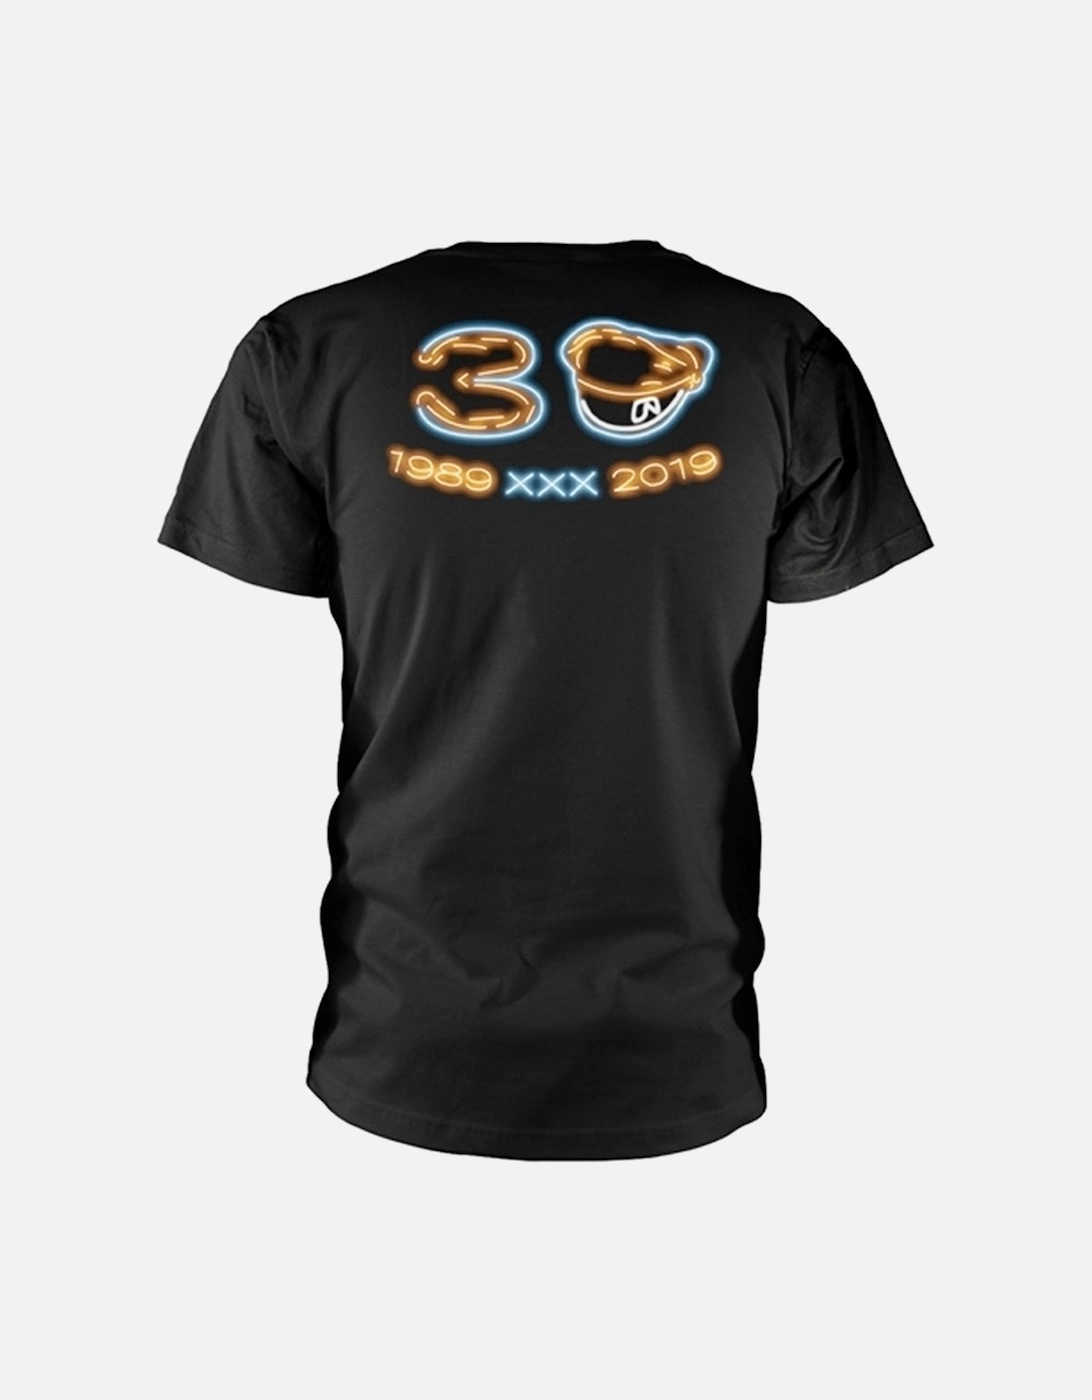 Unisex Adult 30 Anniversary T-Shirt